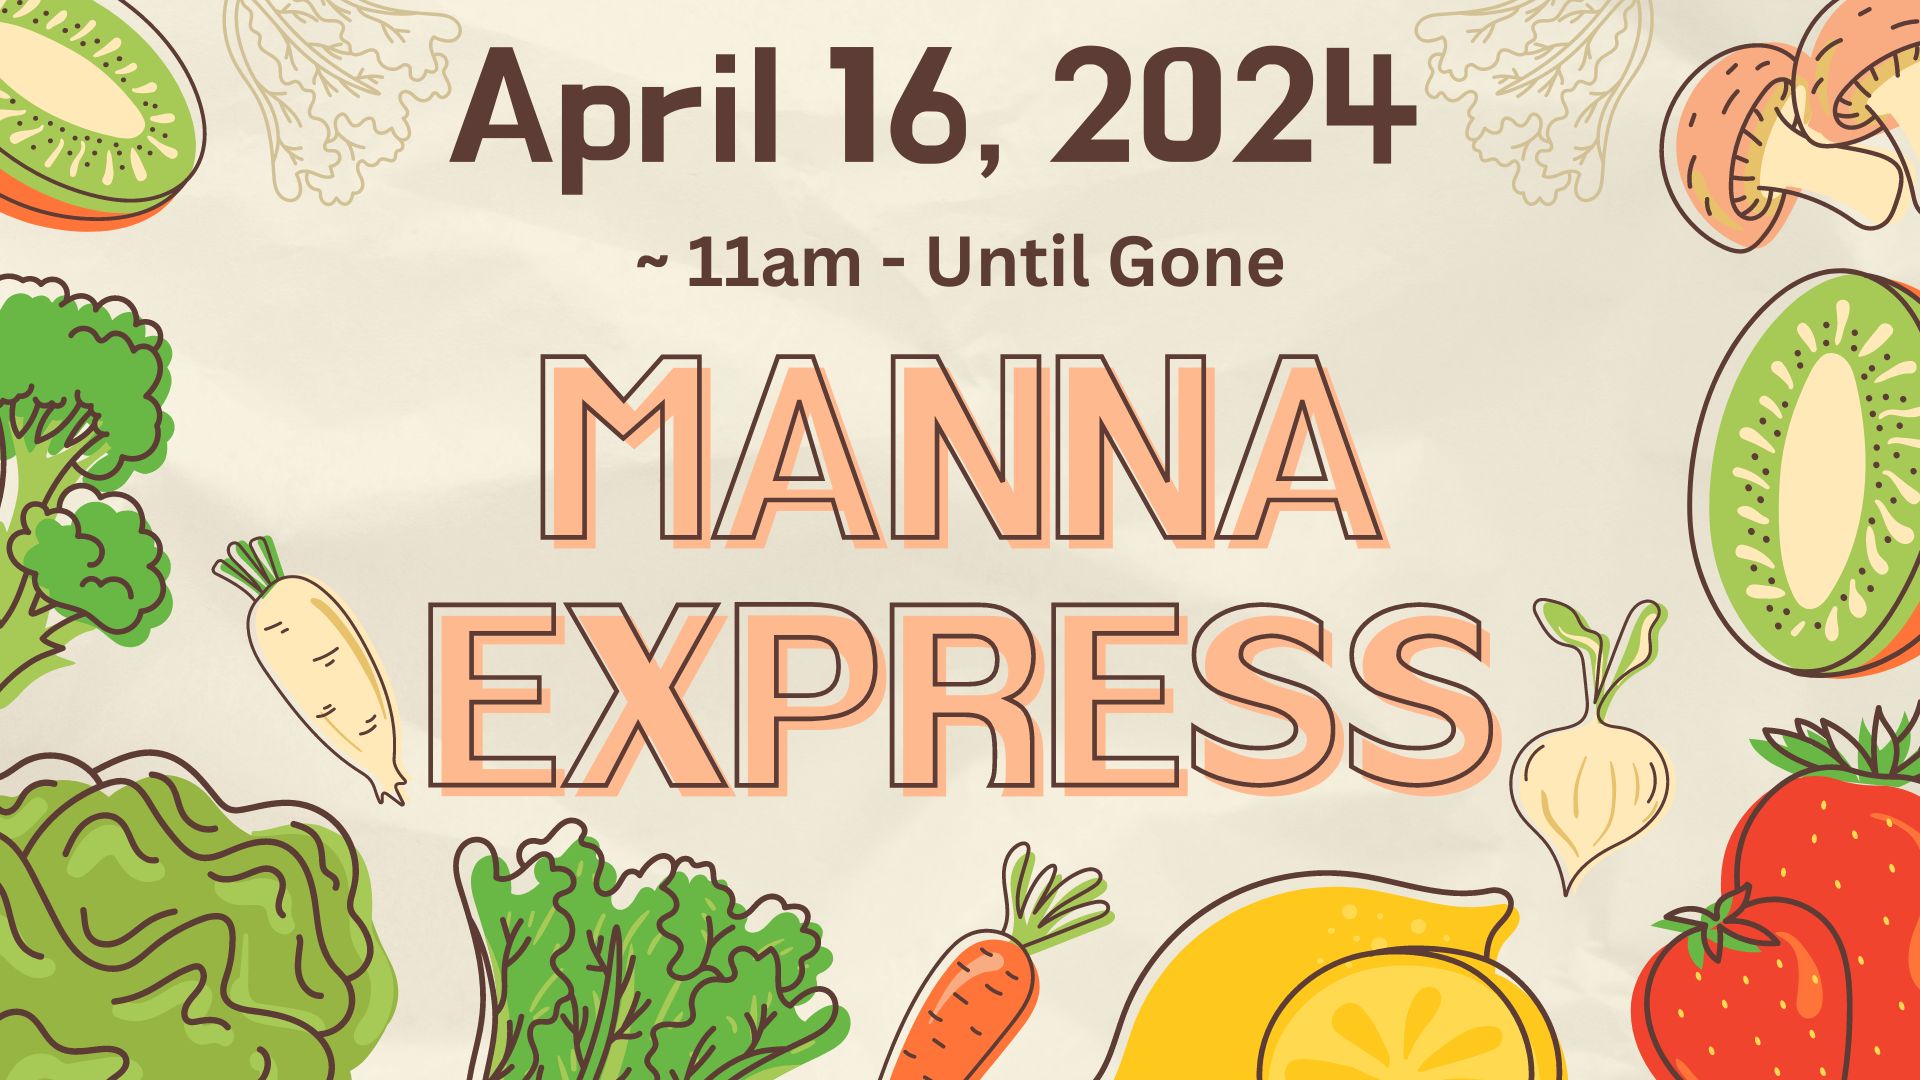 MANNA EXPRESS - Free Produce April 16, 2024 11am until gone.